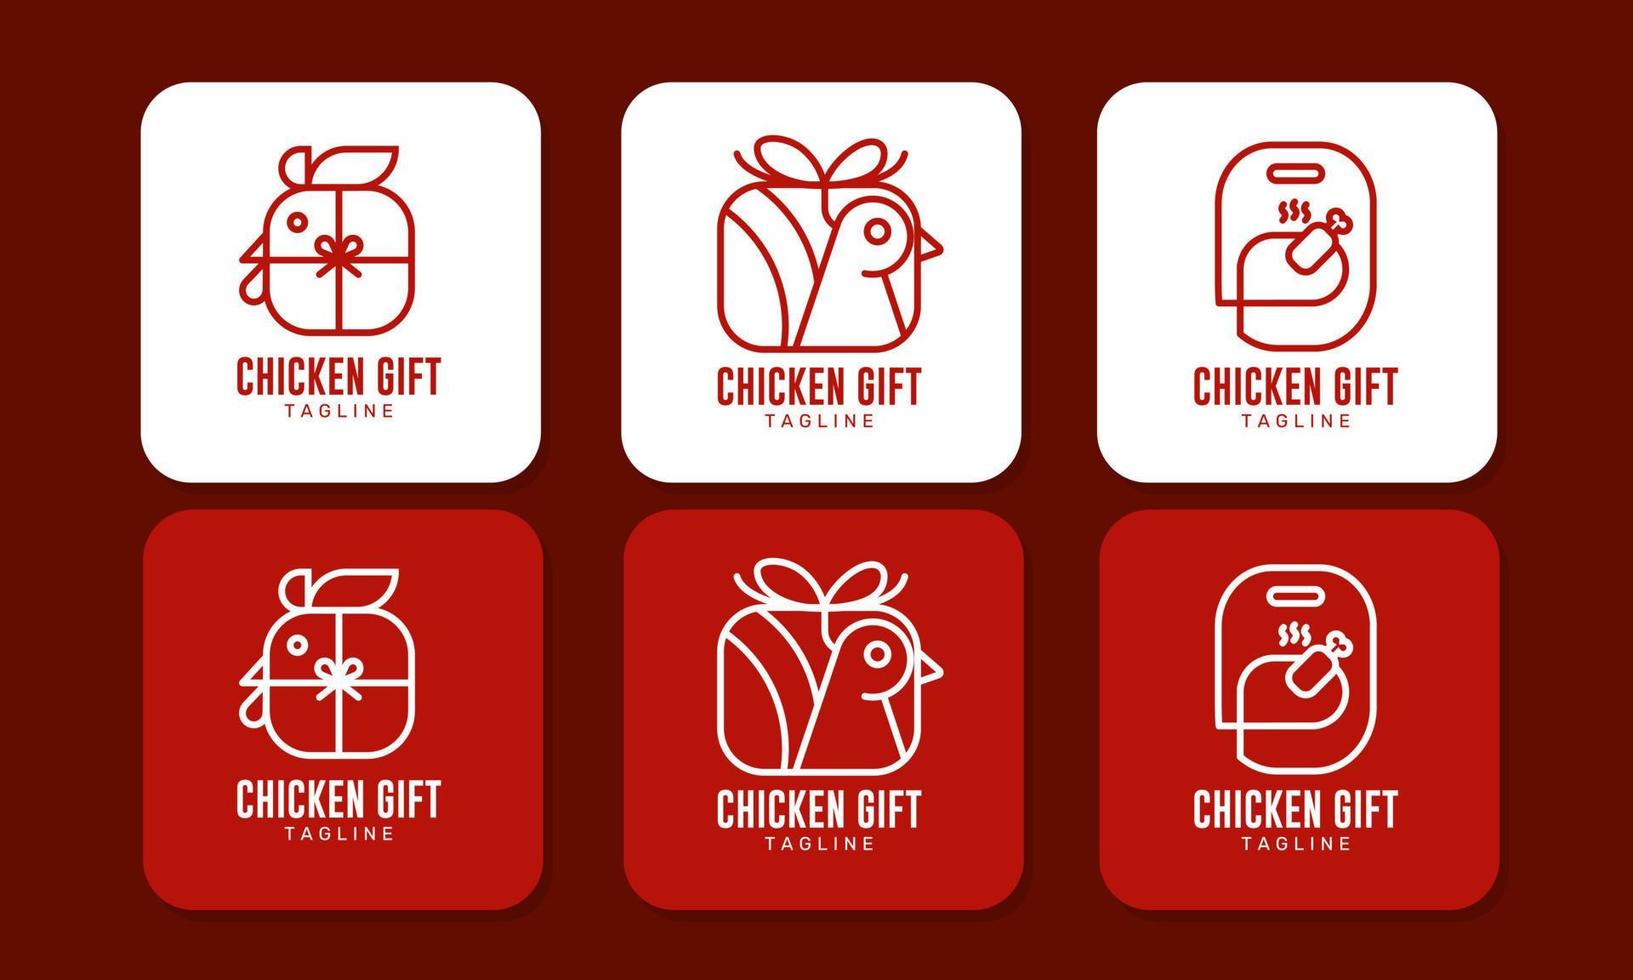 Flat design chicken gift logo template collection vector